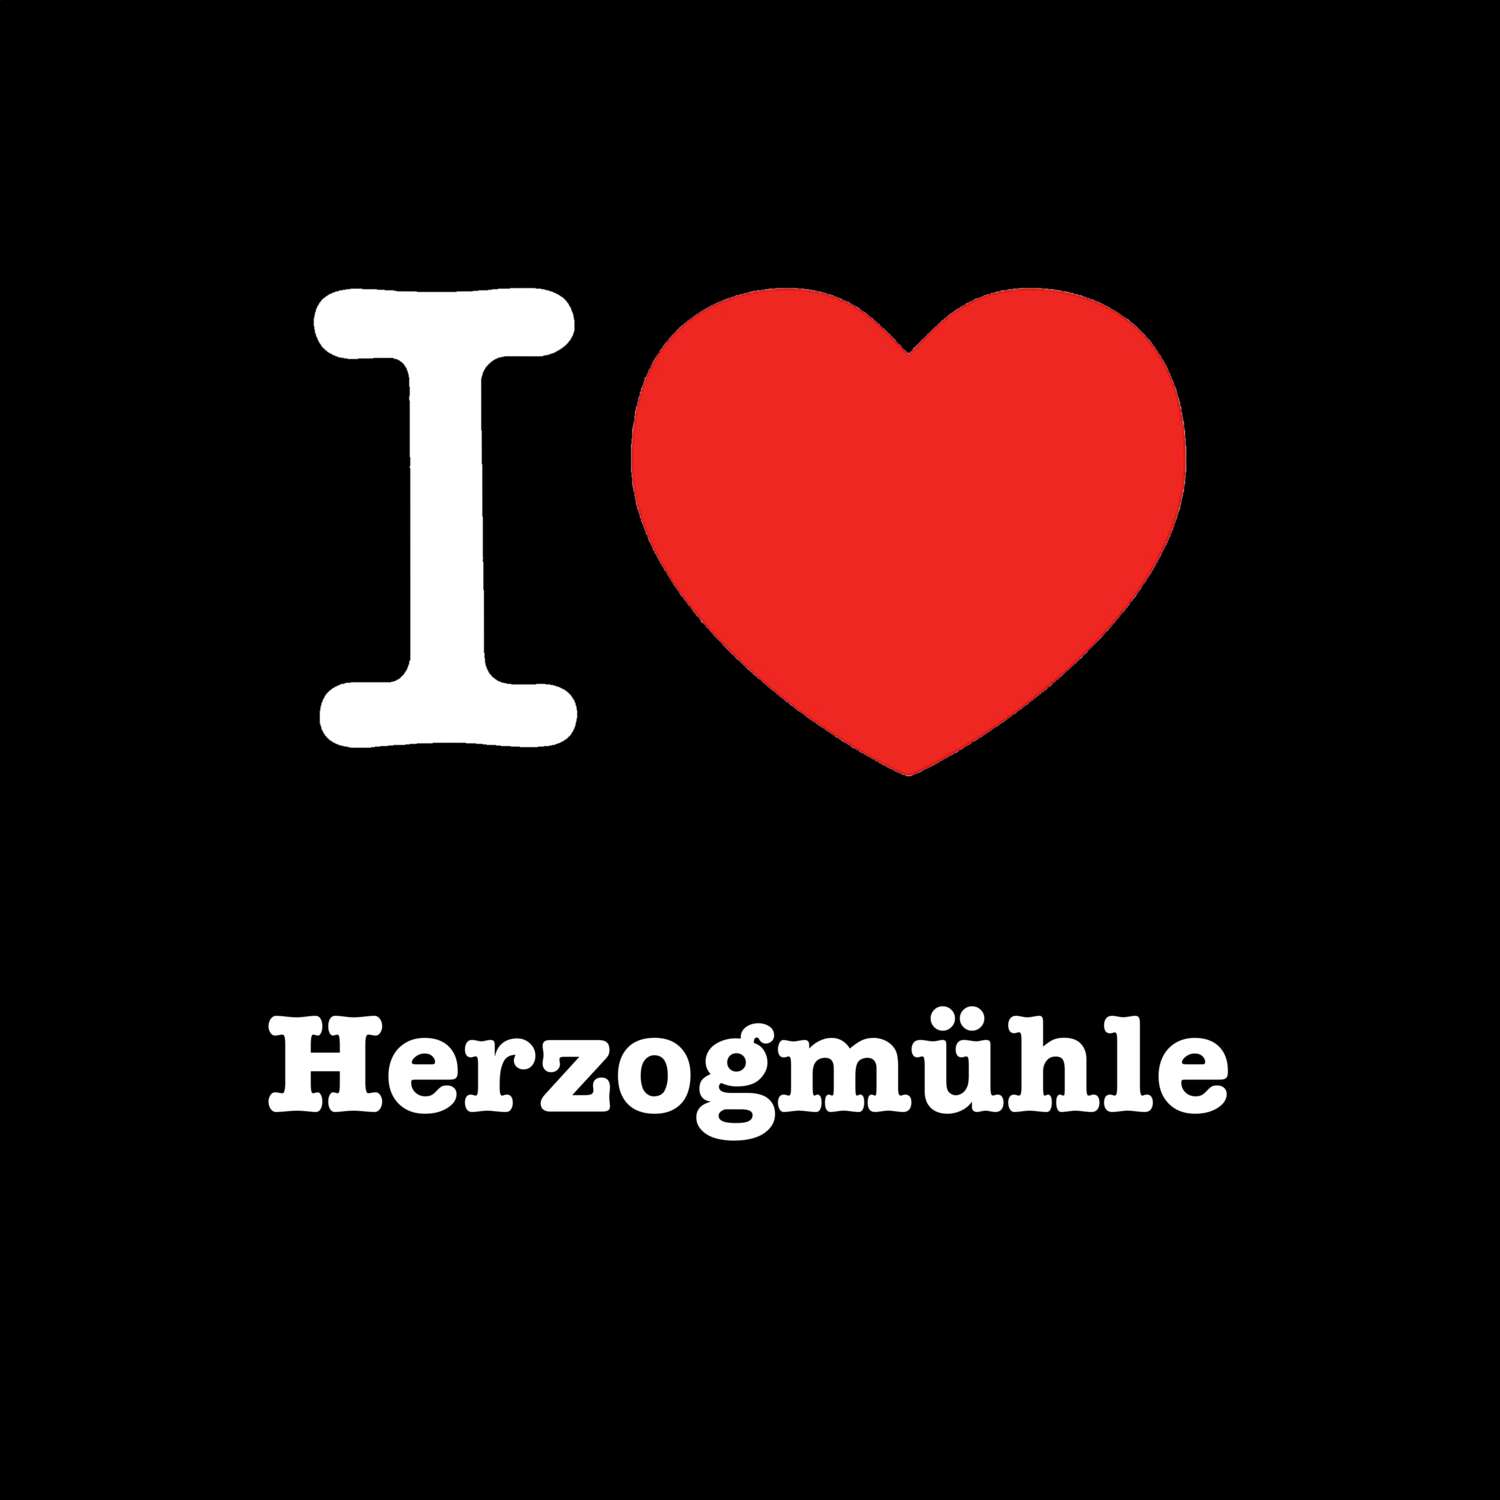 Herzogmühle T-Shirt »I love«